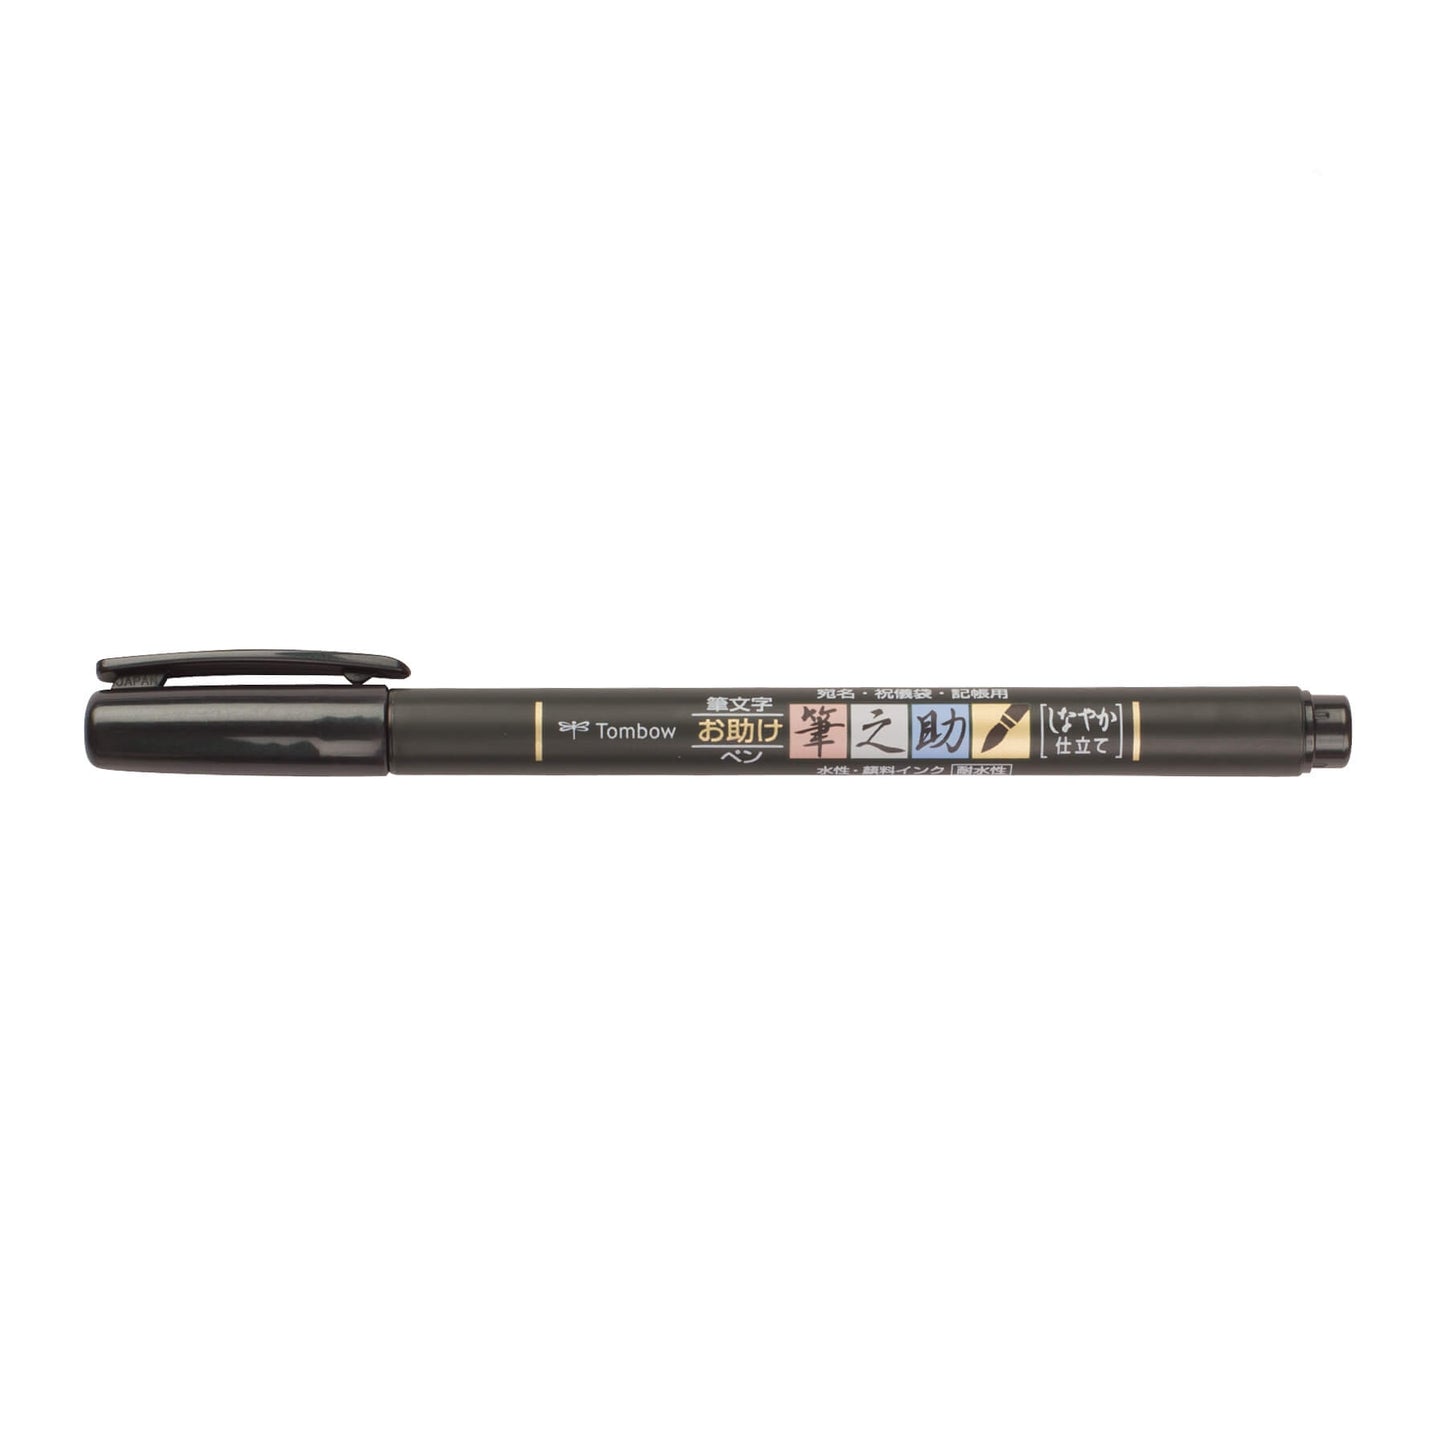 Tombow Fudenosuke Soft Brush Pen Black - Side